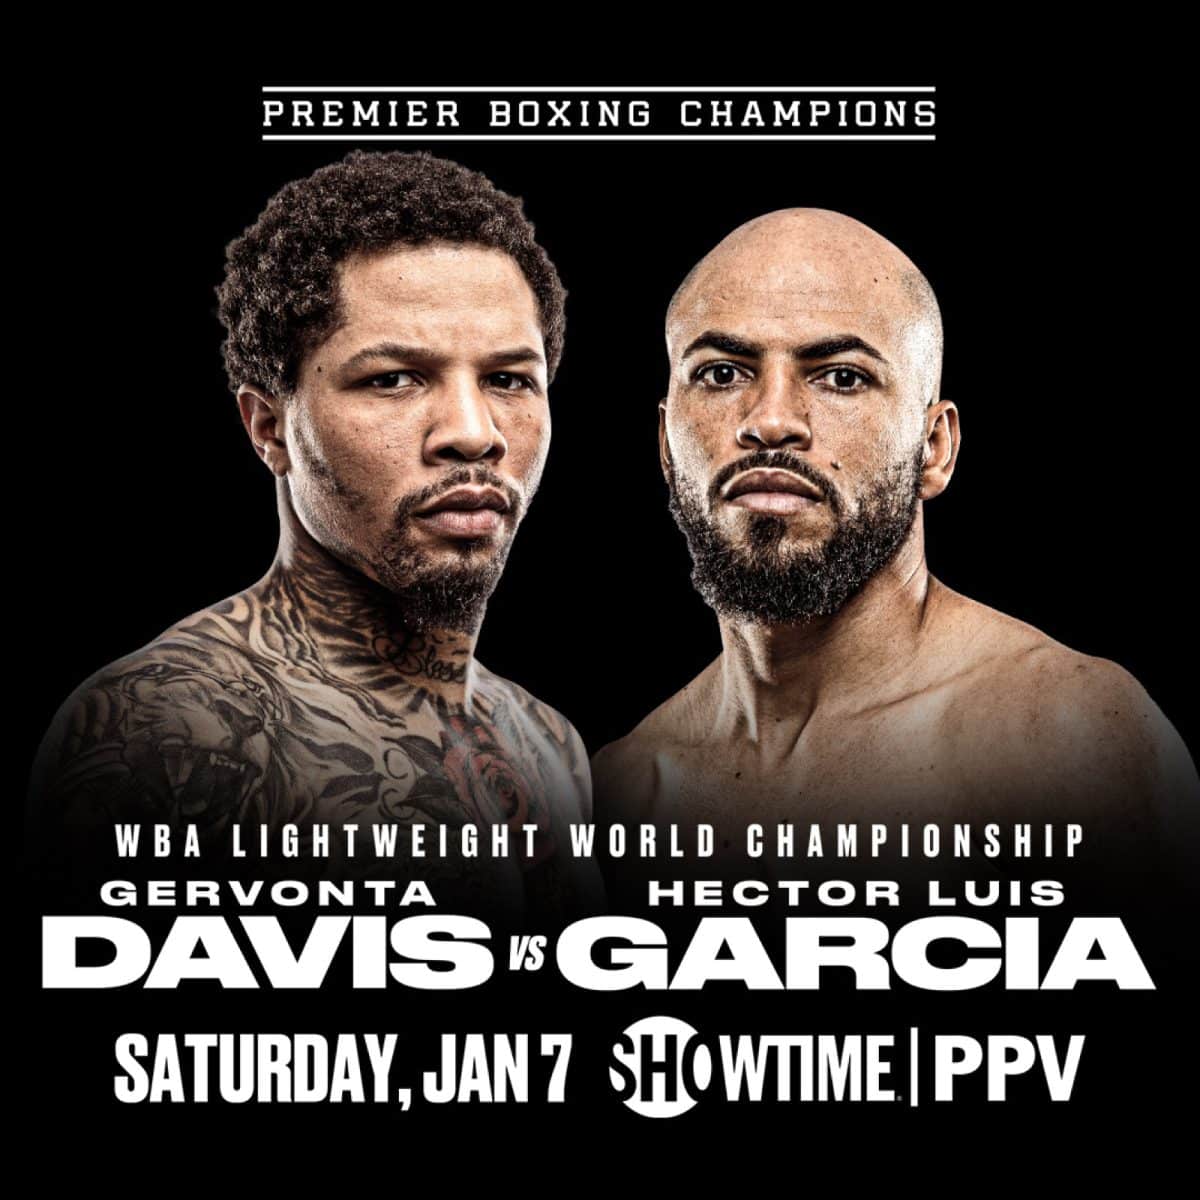 Image: Gervonta Davis to fight Hector Luis Garcia on Jan.7th in Washington DC